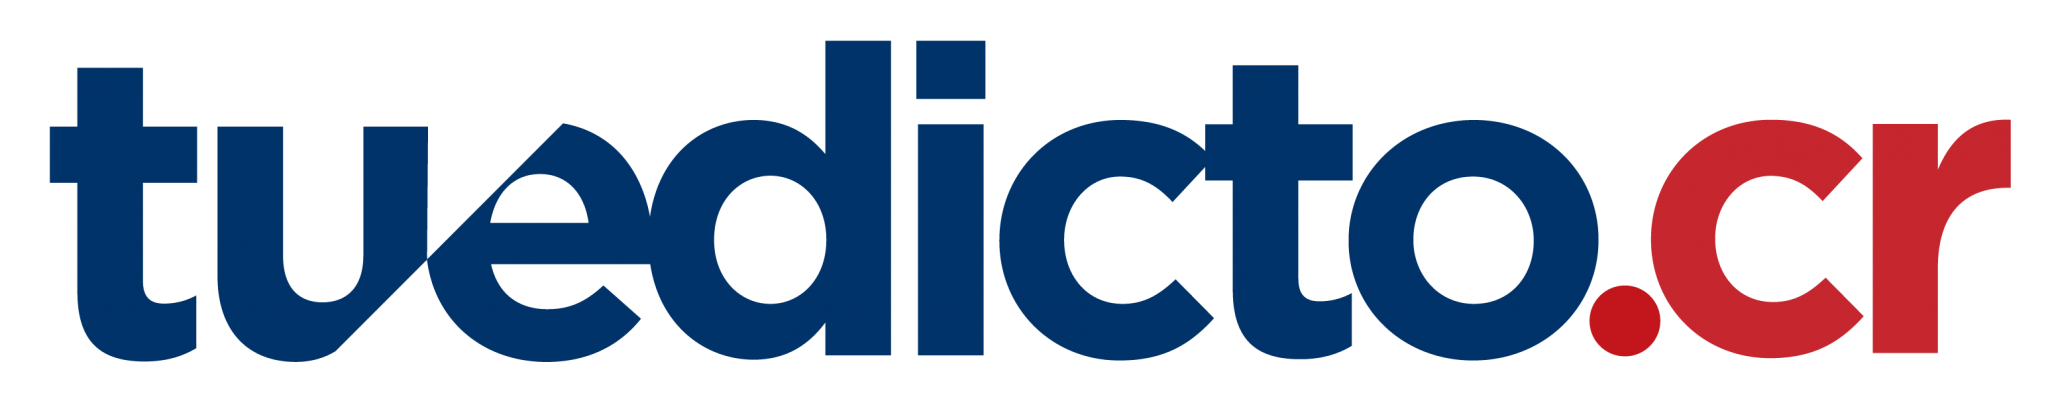 Logo tuedicto.cr